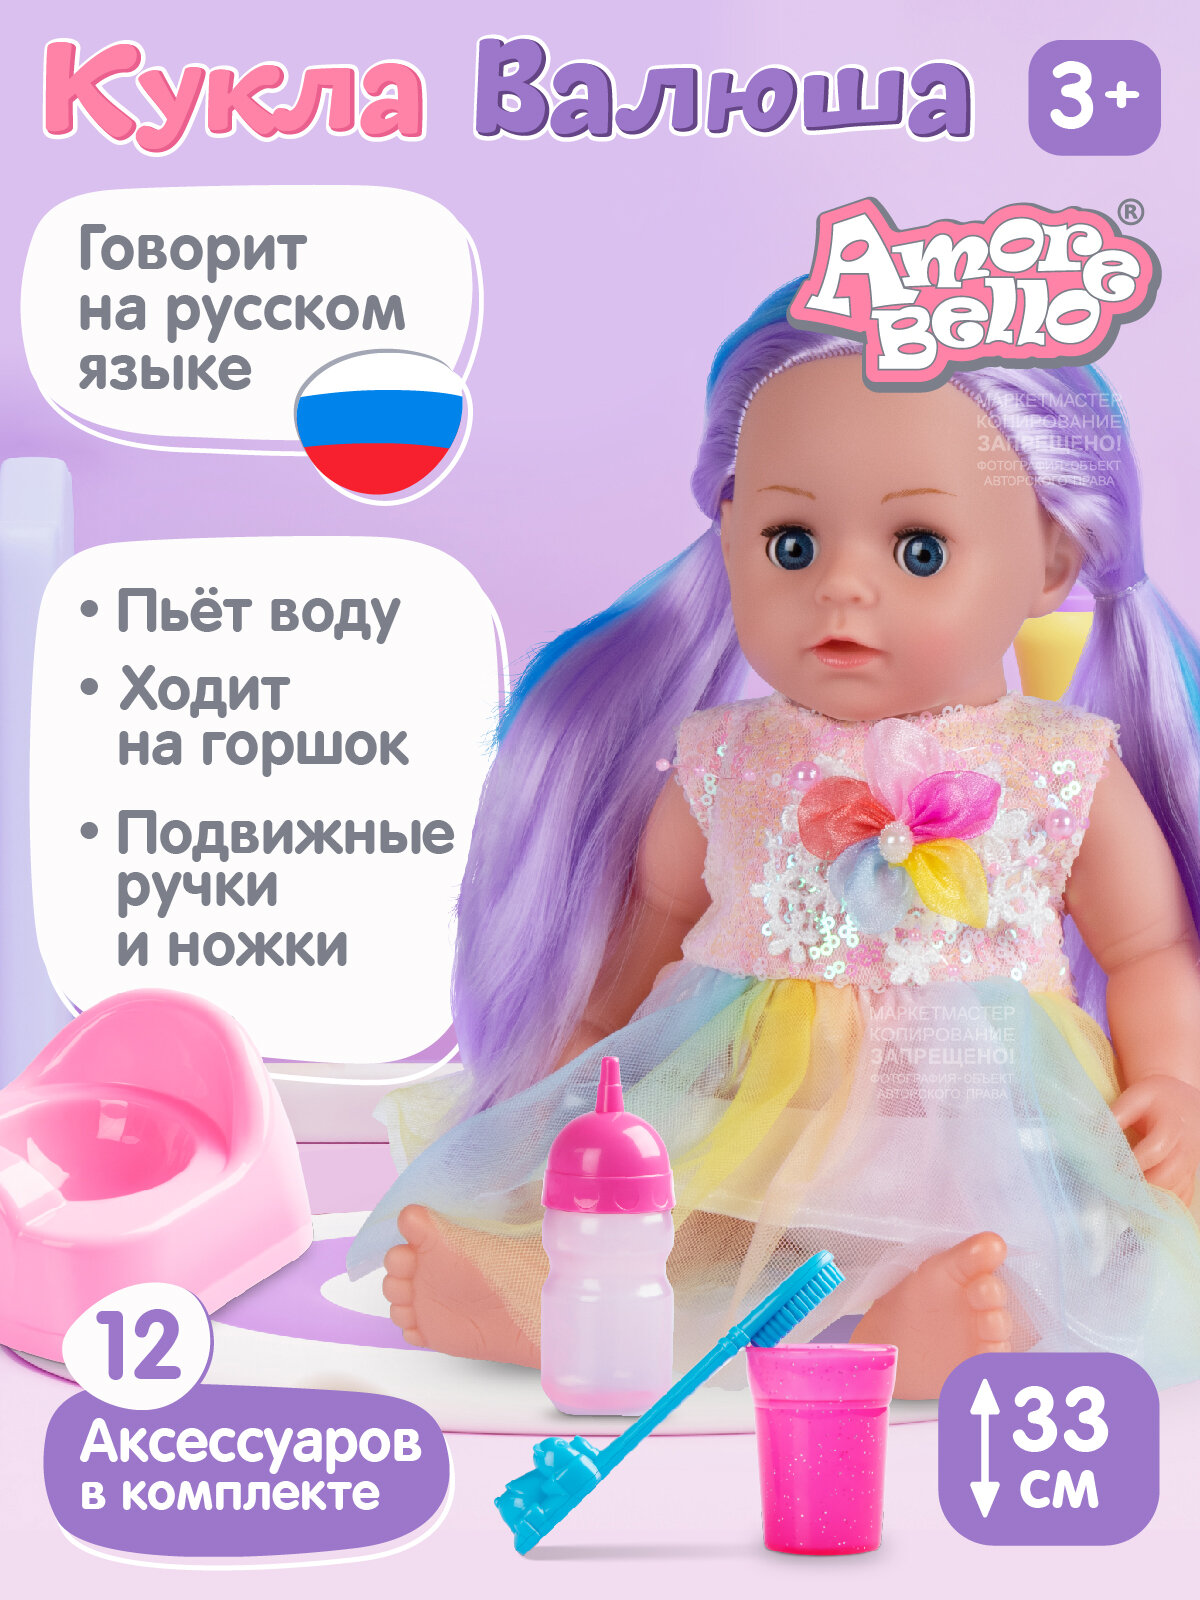 Кукла с аксессуарами Валюша, игра в дочки-матери, звук, JB0211670